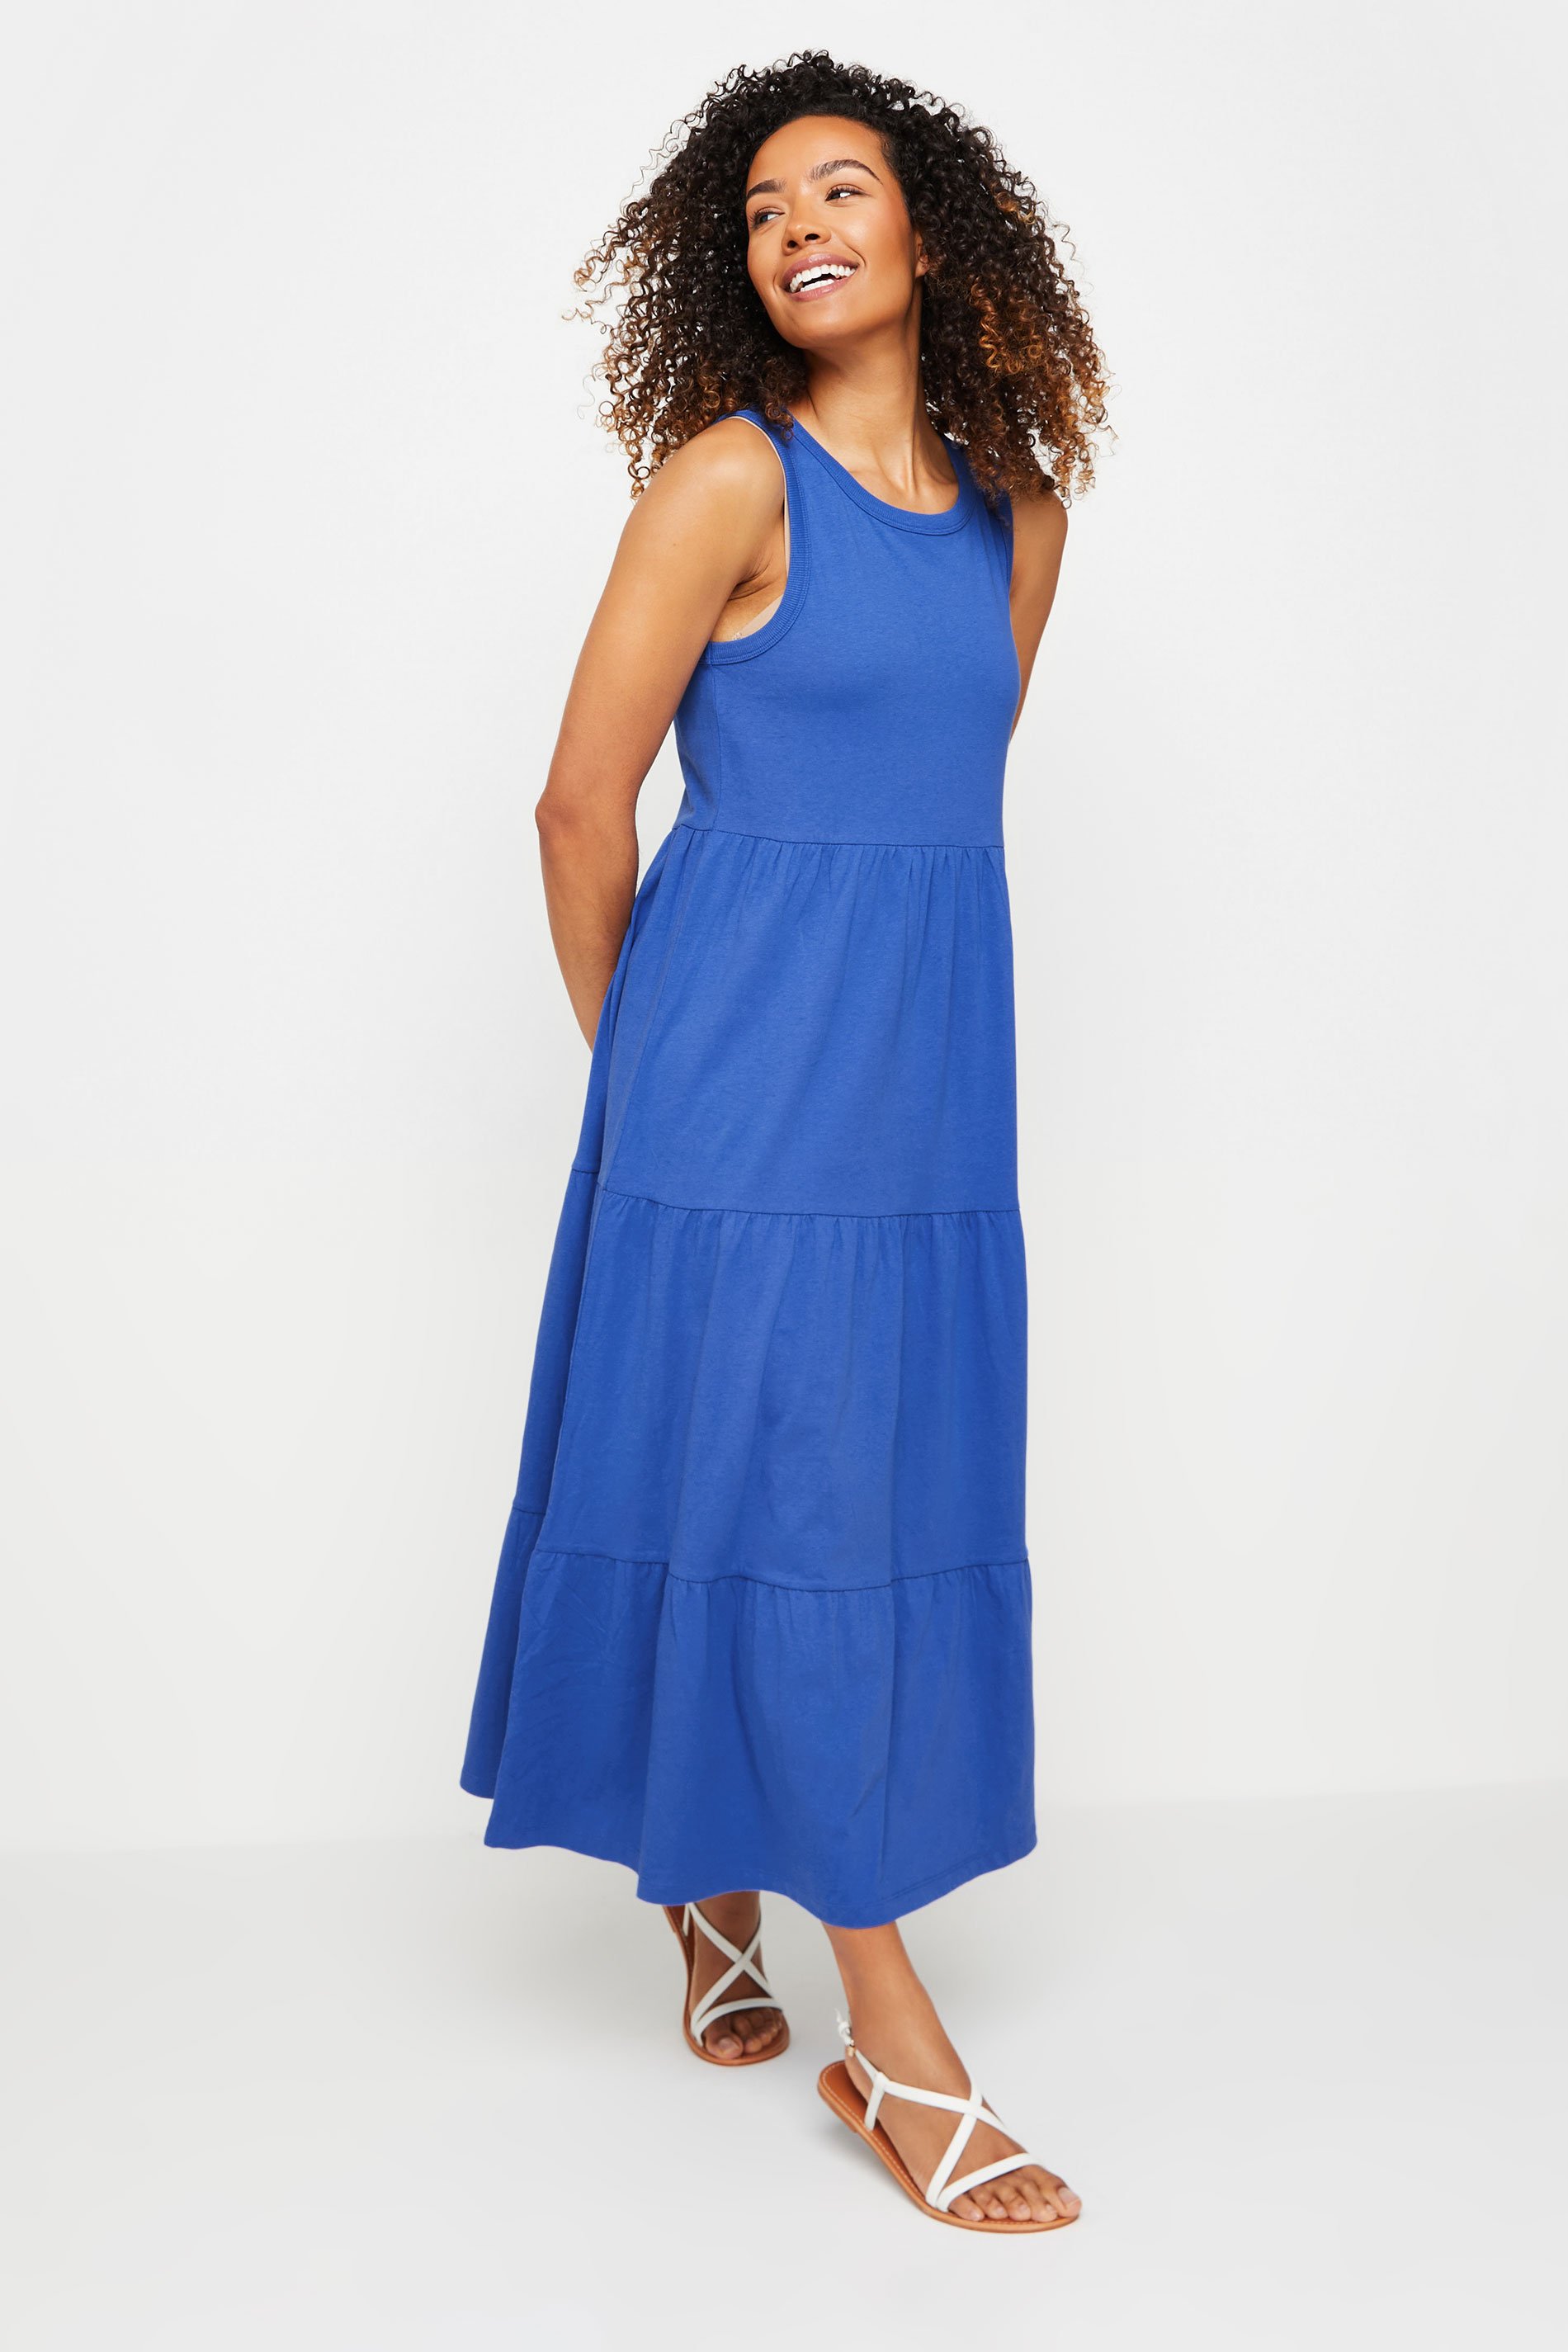 M&Co Cobalt Blue Sleeveless Tiered Cotton Maxi Dress | M&Co 2